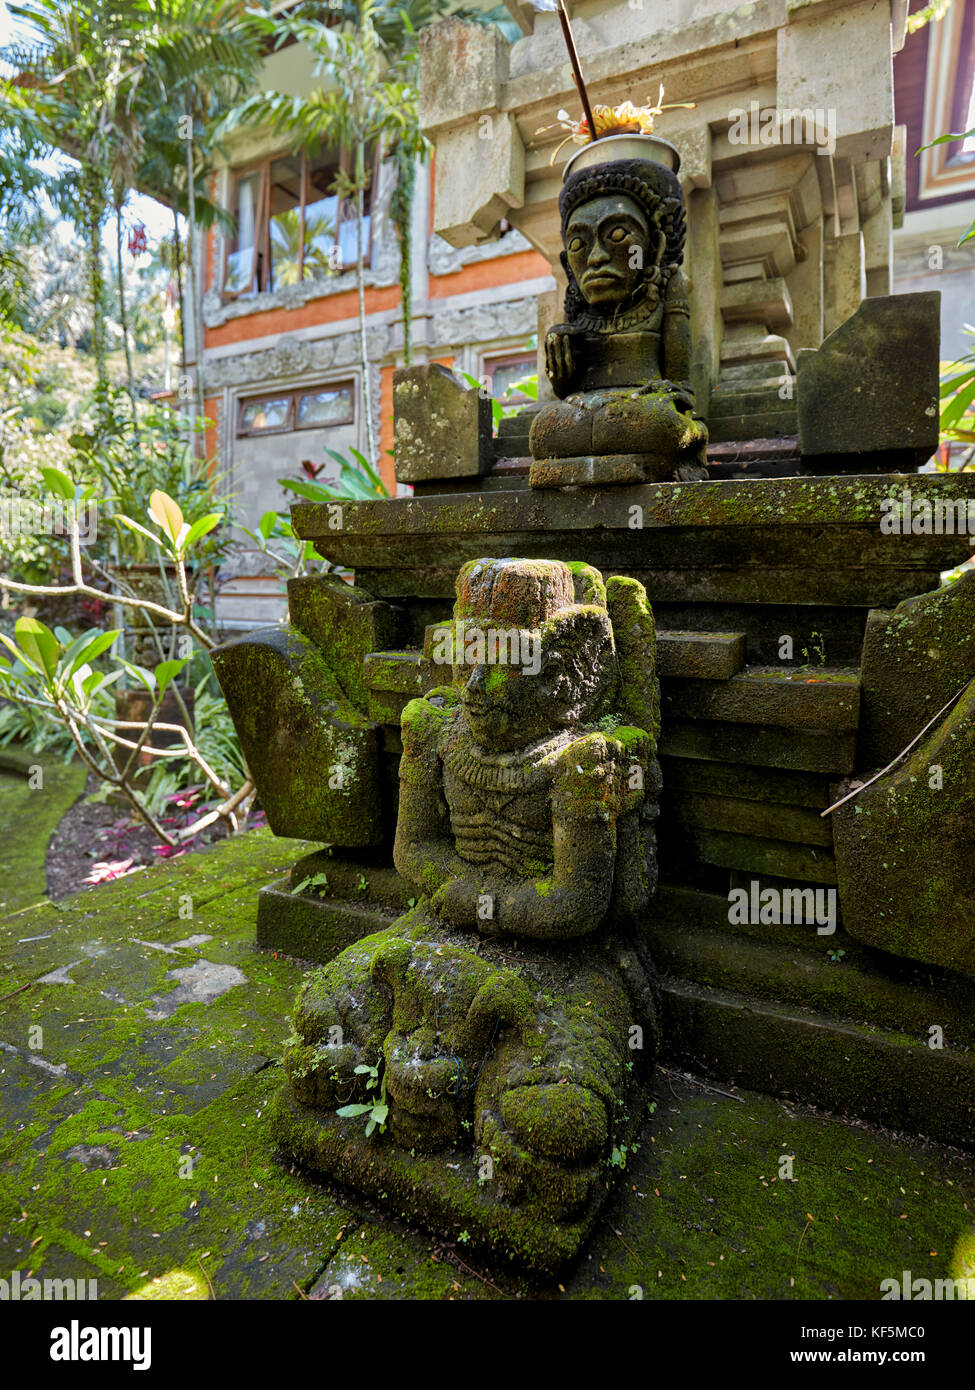 Statue in the garden of the Agung Rai Museum of Art (ARMA). Ubud, Bali, Indonesia. Stock Photo